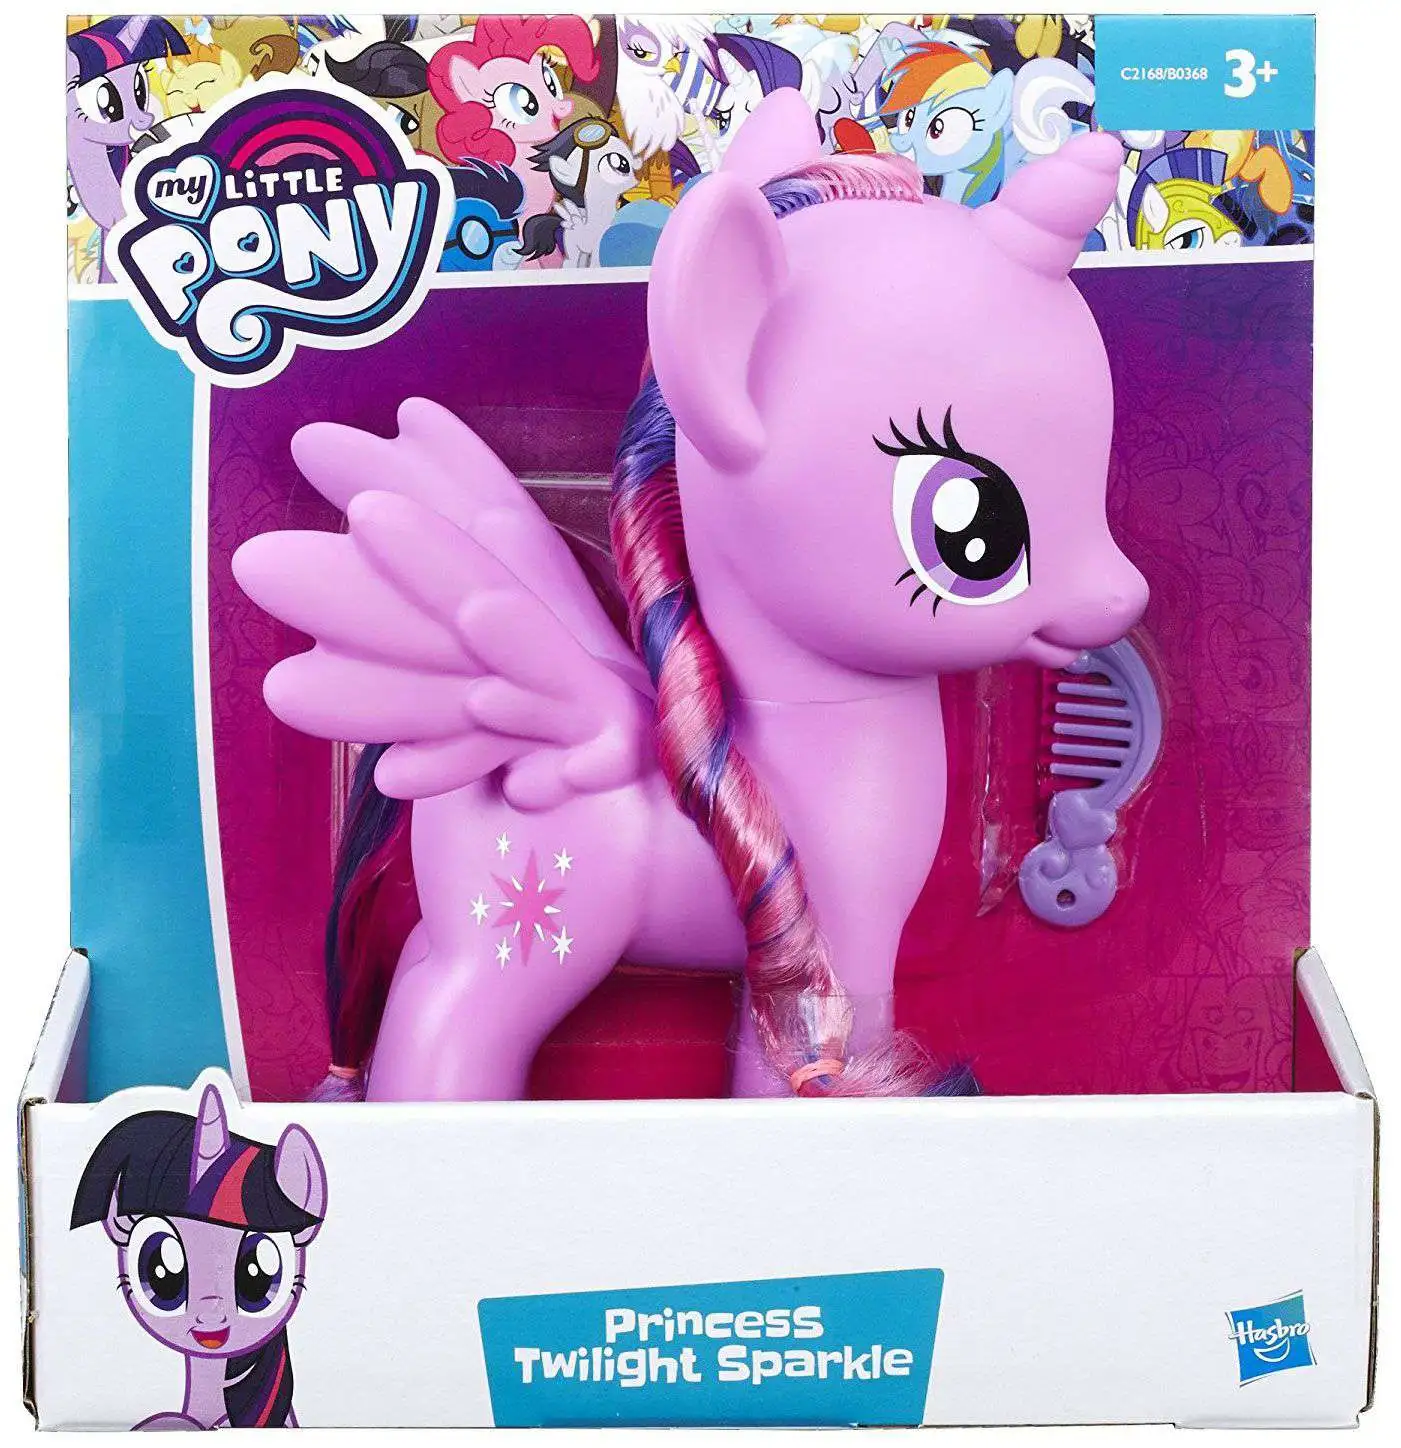 My Little Pony: Friendship Is Magic Princess Twilight Sparkle